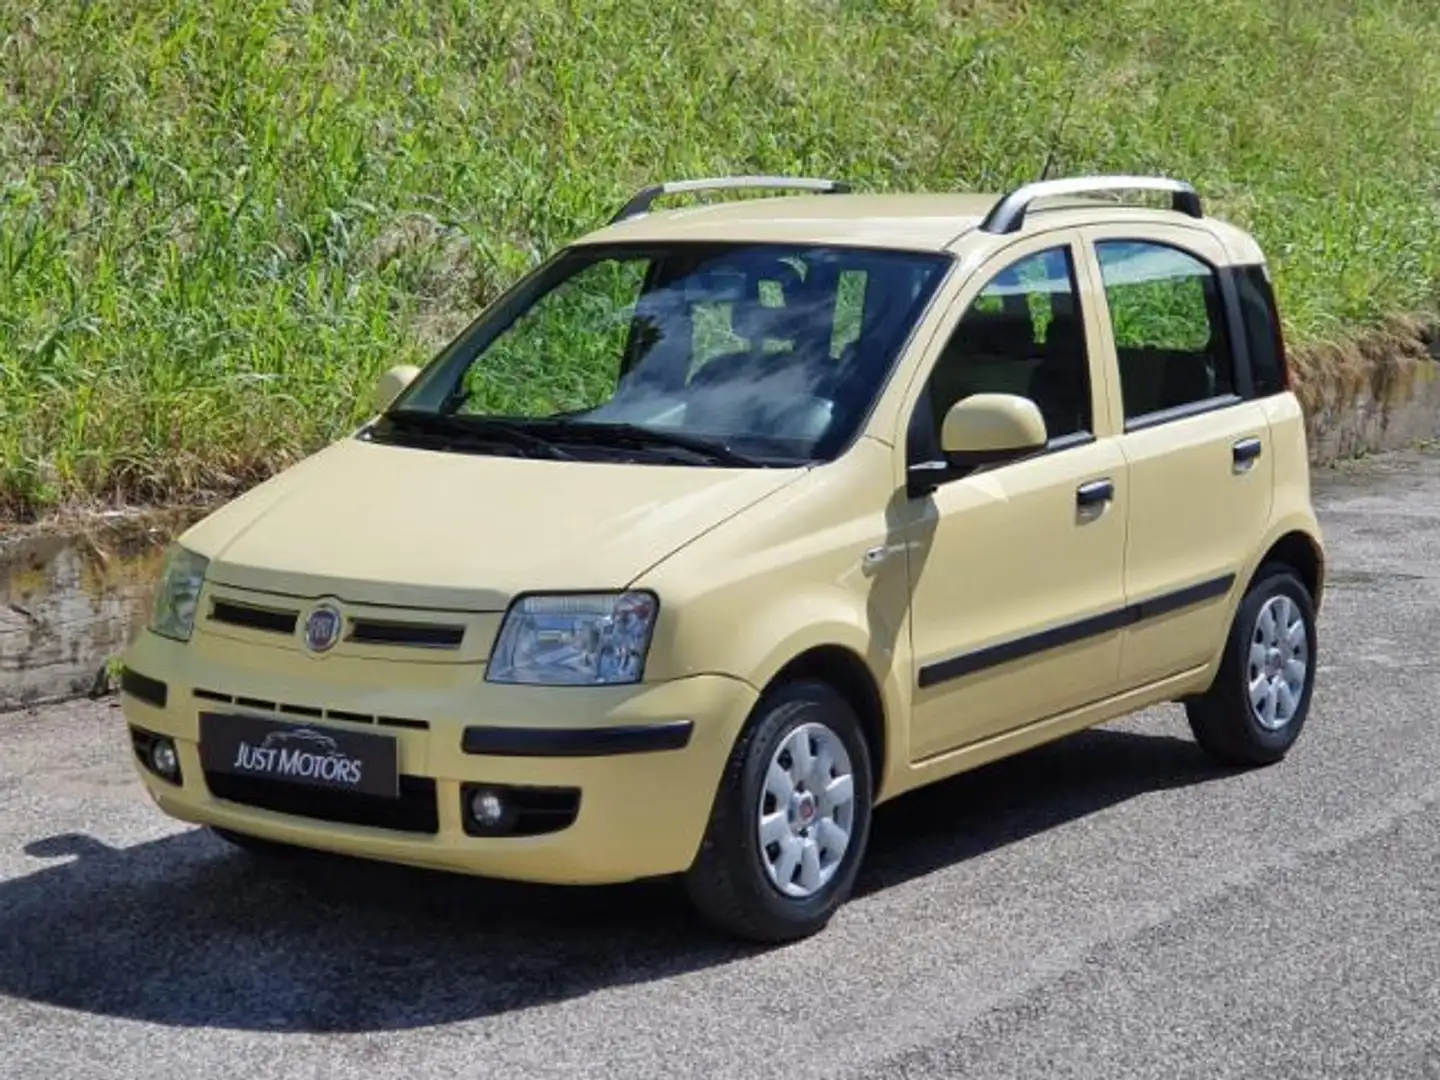 usato Fiat Panda City car a Bussolengo - Verona per € 5.000,-